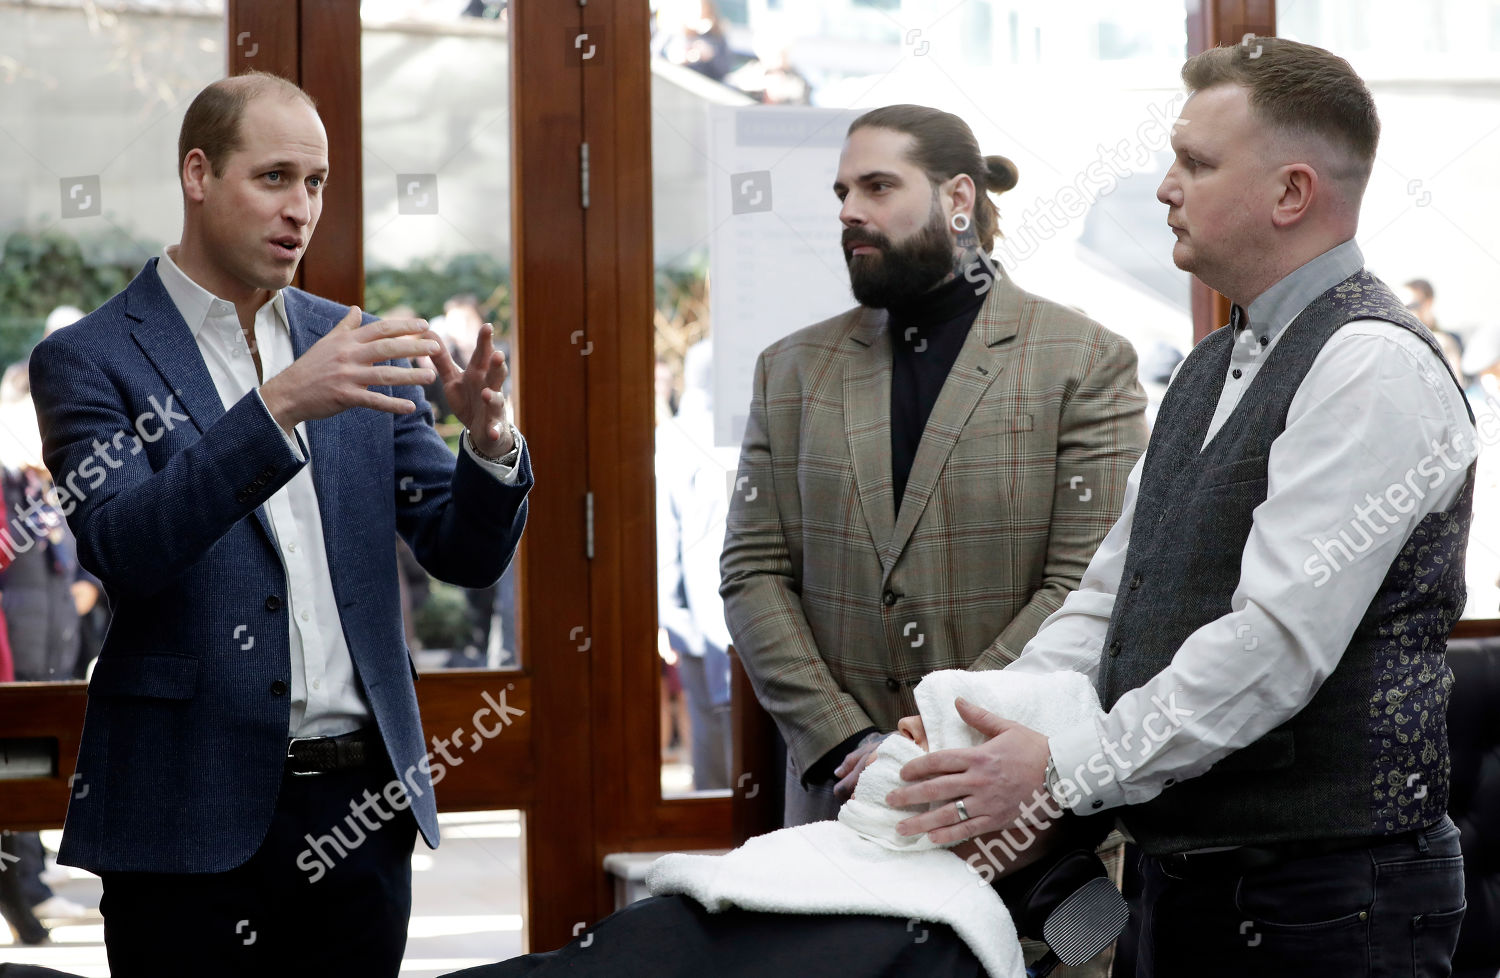 prince-william-visits-pall-mall-barbers-paddington-london-uk-shutterstock-editorial-10104776b.jpg